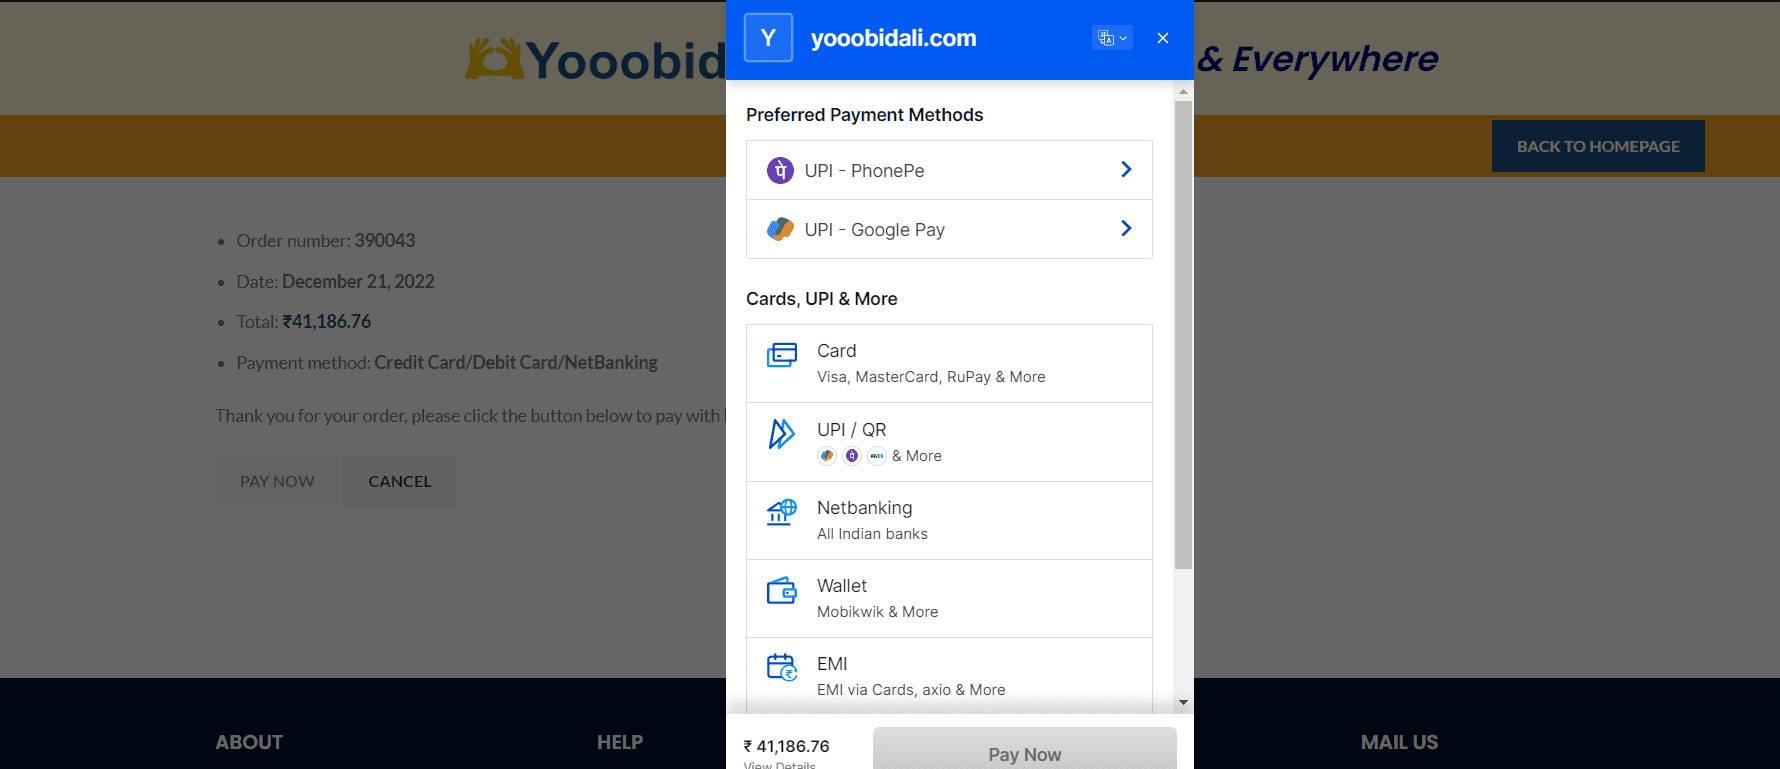 Checkout yooobidali com - yooobidali.com